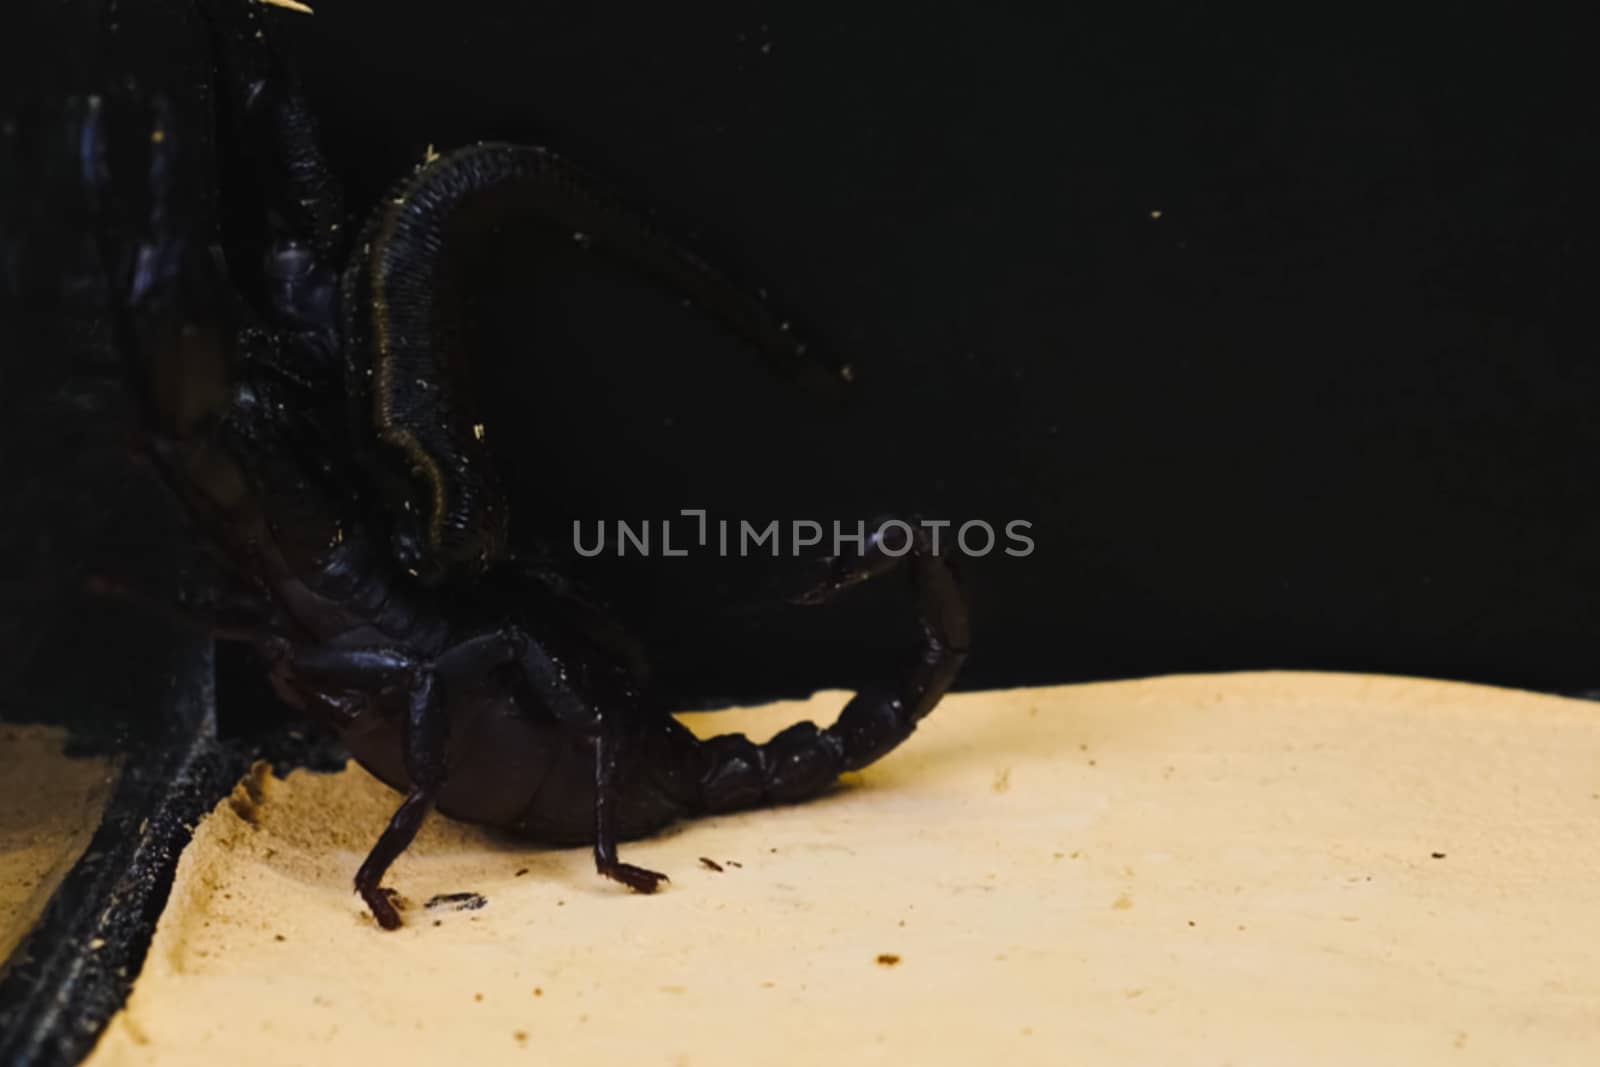 Scorpion with a leech in terrarium. Black scorpion is a poisonous arthropod and bloodsucking leech. by DePo